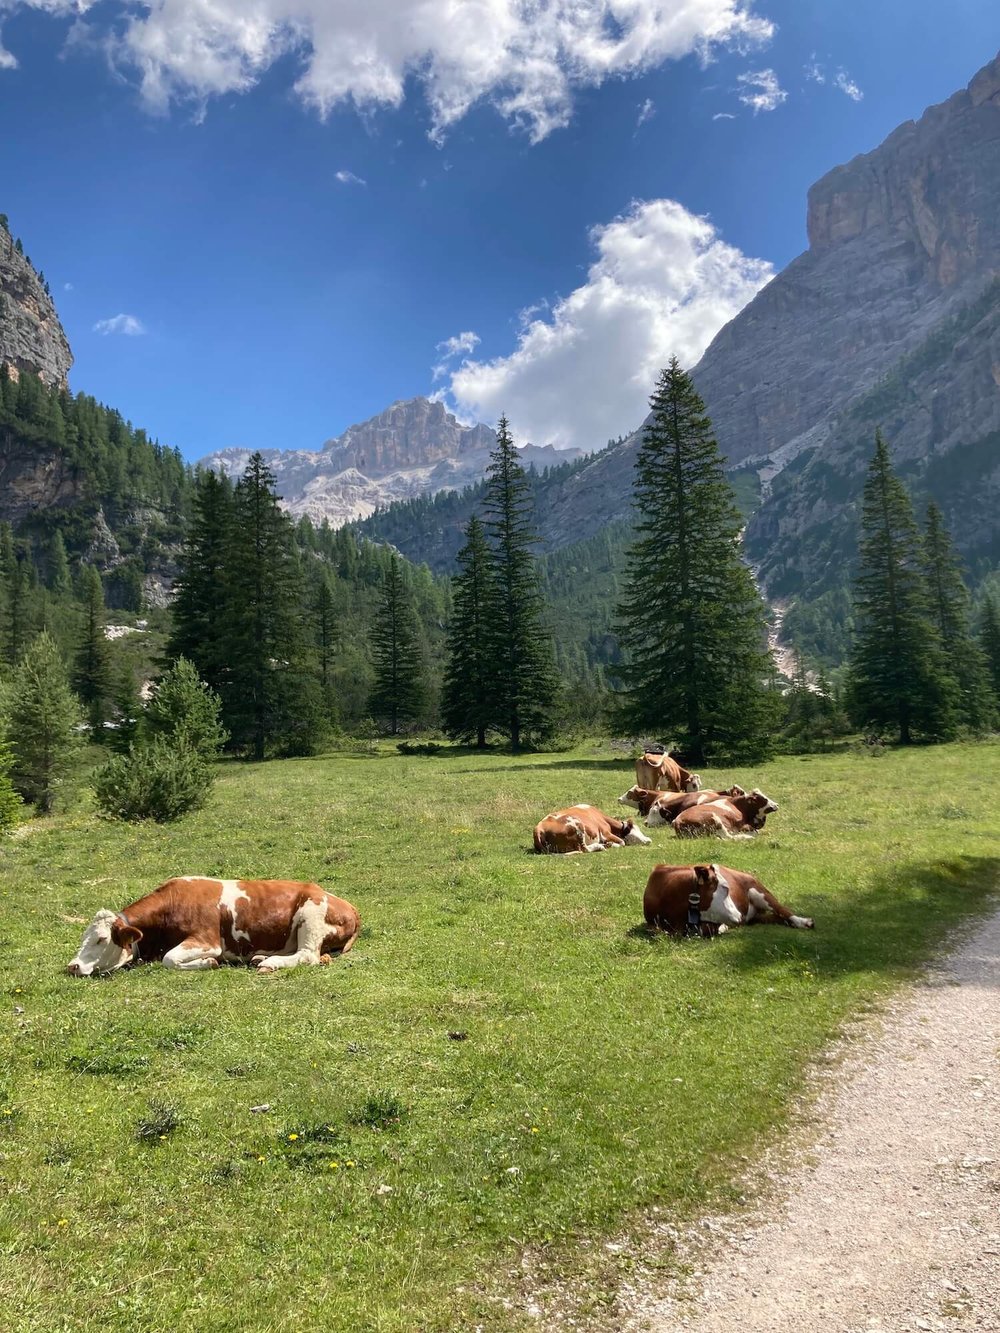 Route via Capanna Alpina cows (1).jpg